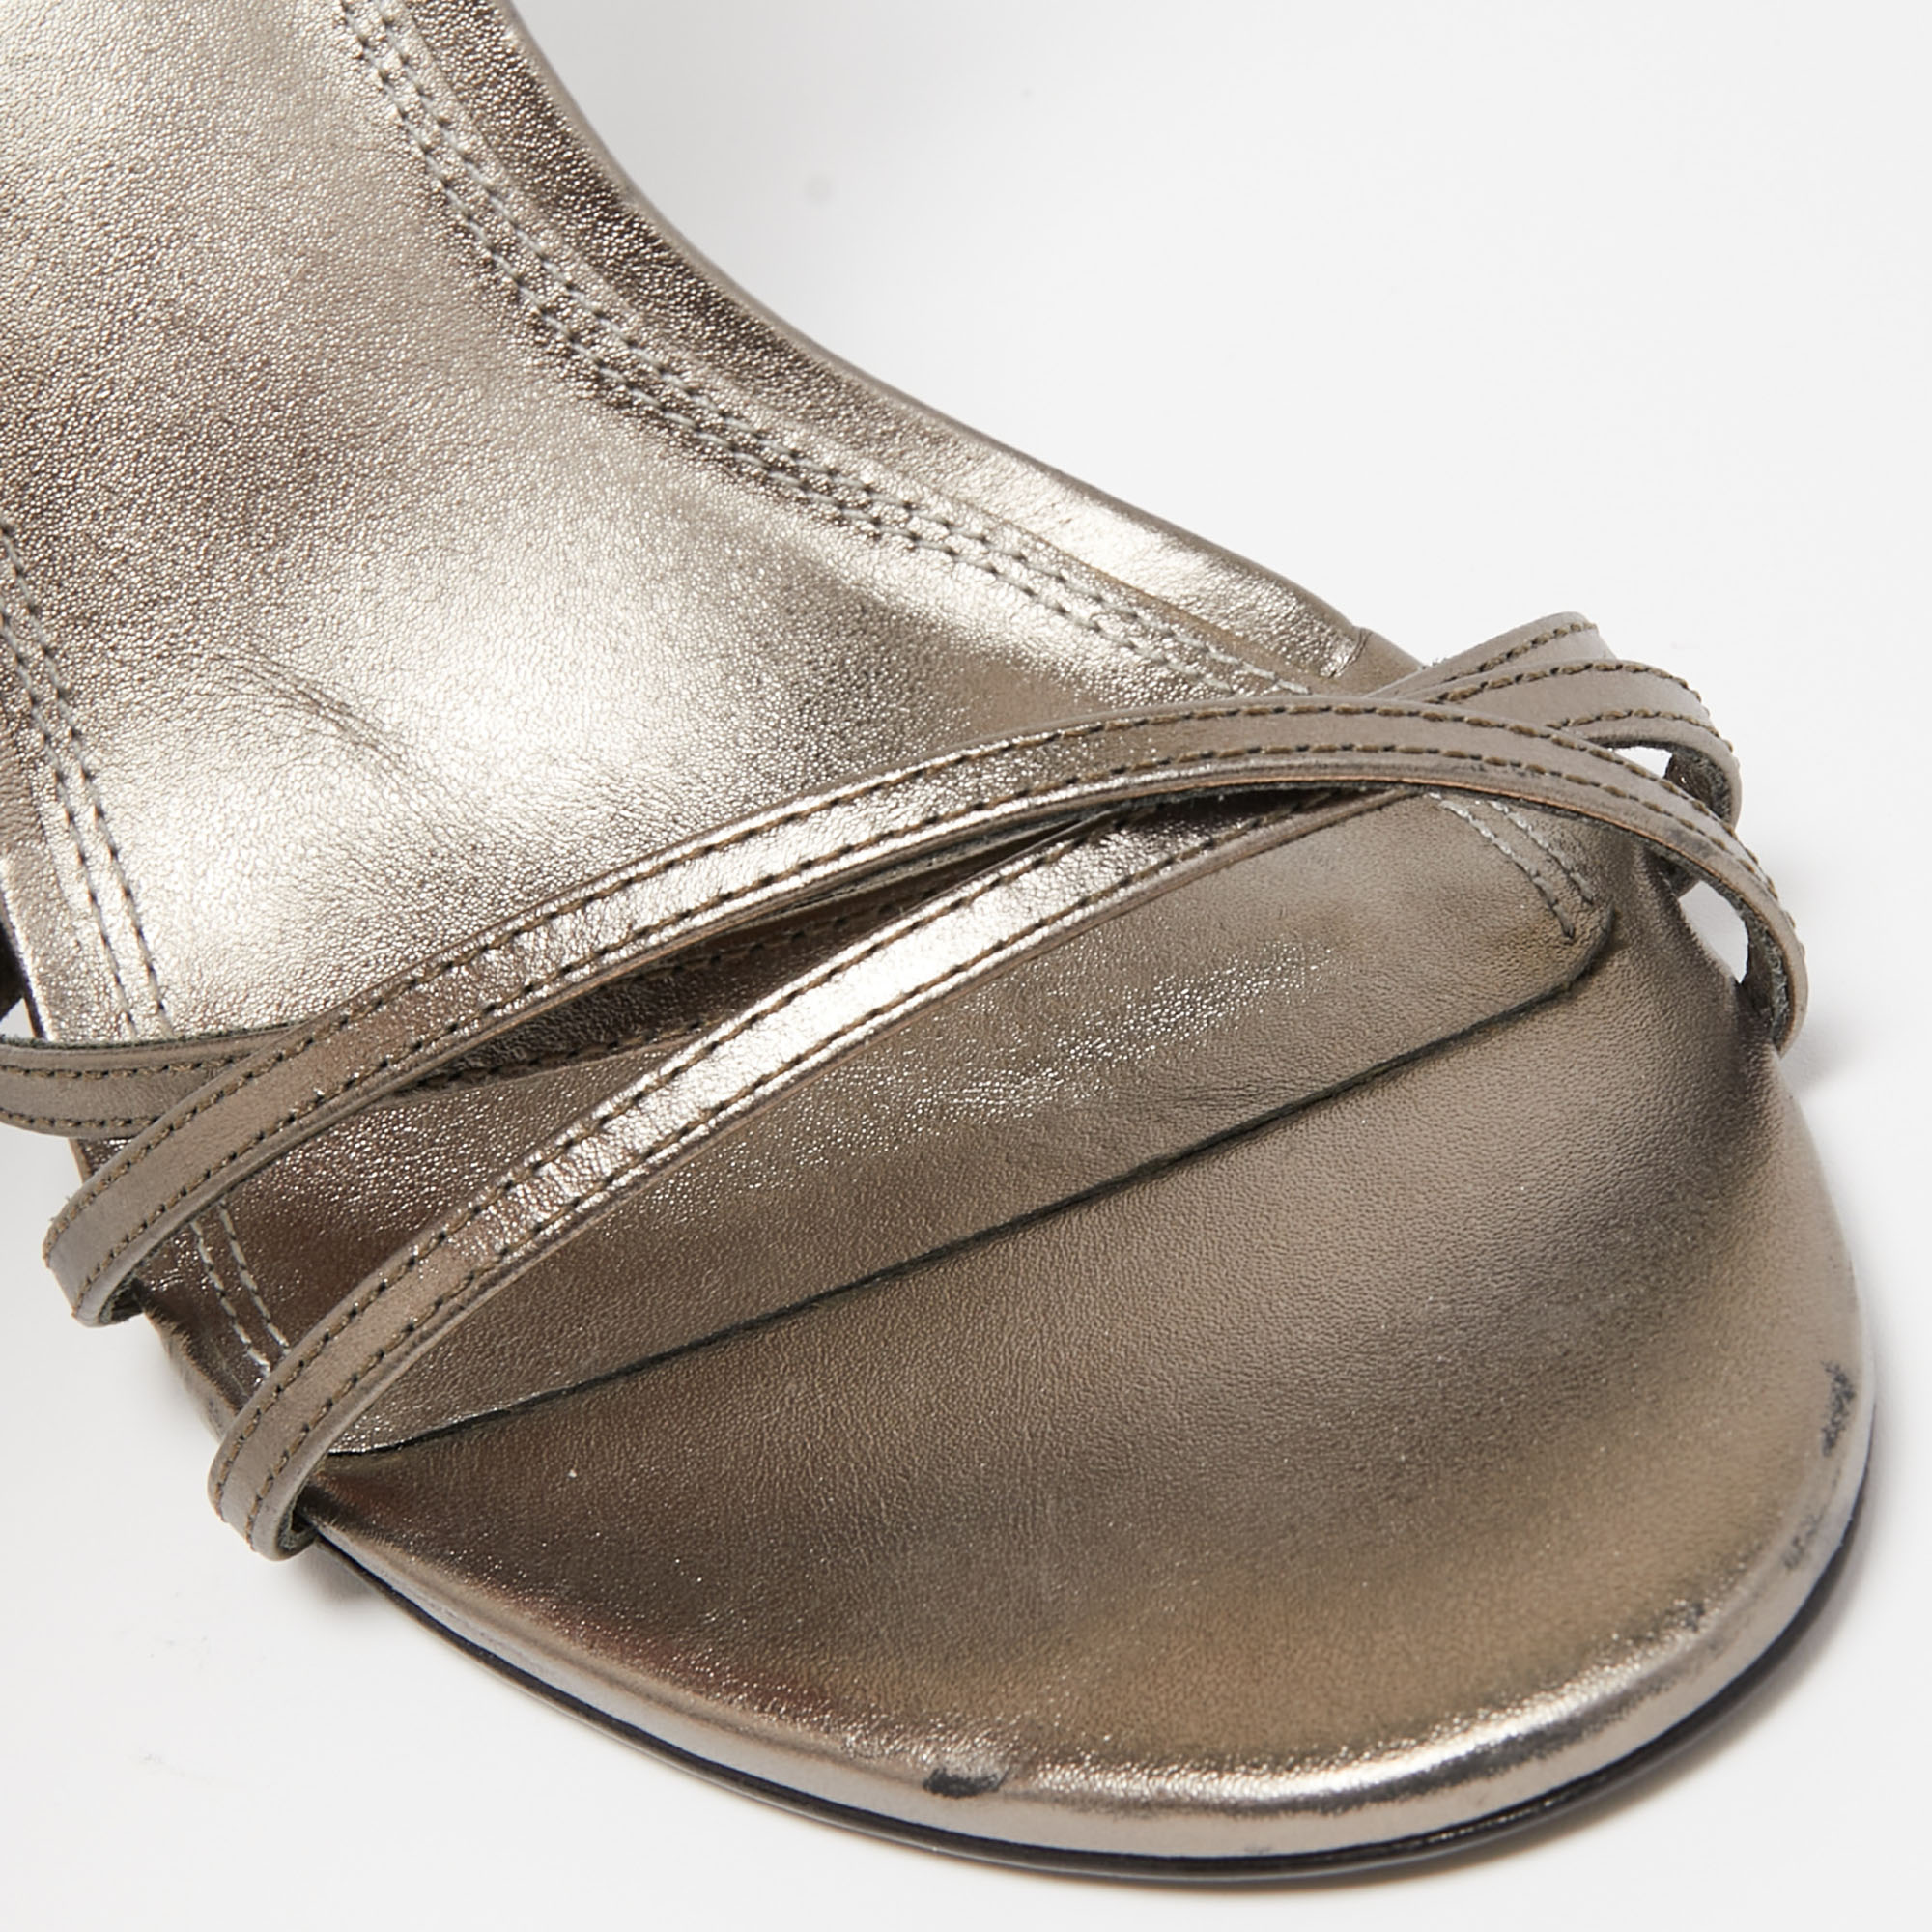 Black Suede Studio X Caroline Stanbury Metallic Leather Ankle Wrap Sandals Size 38